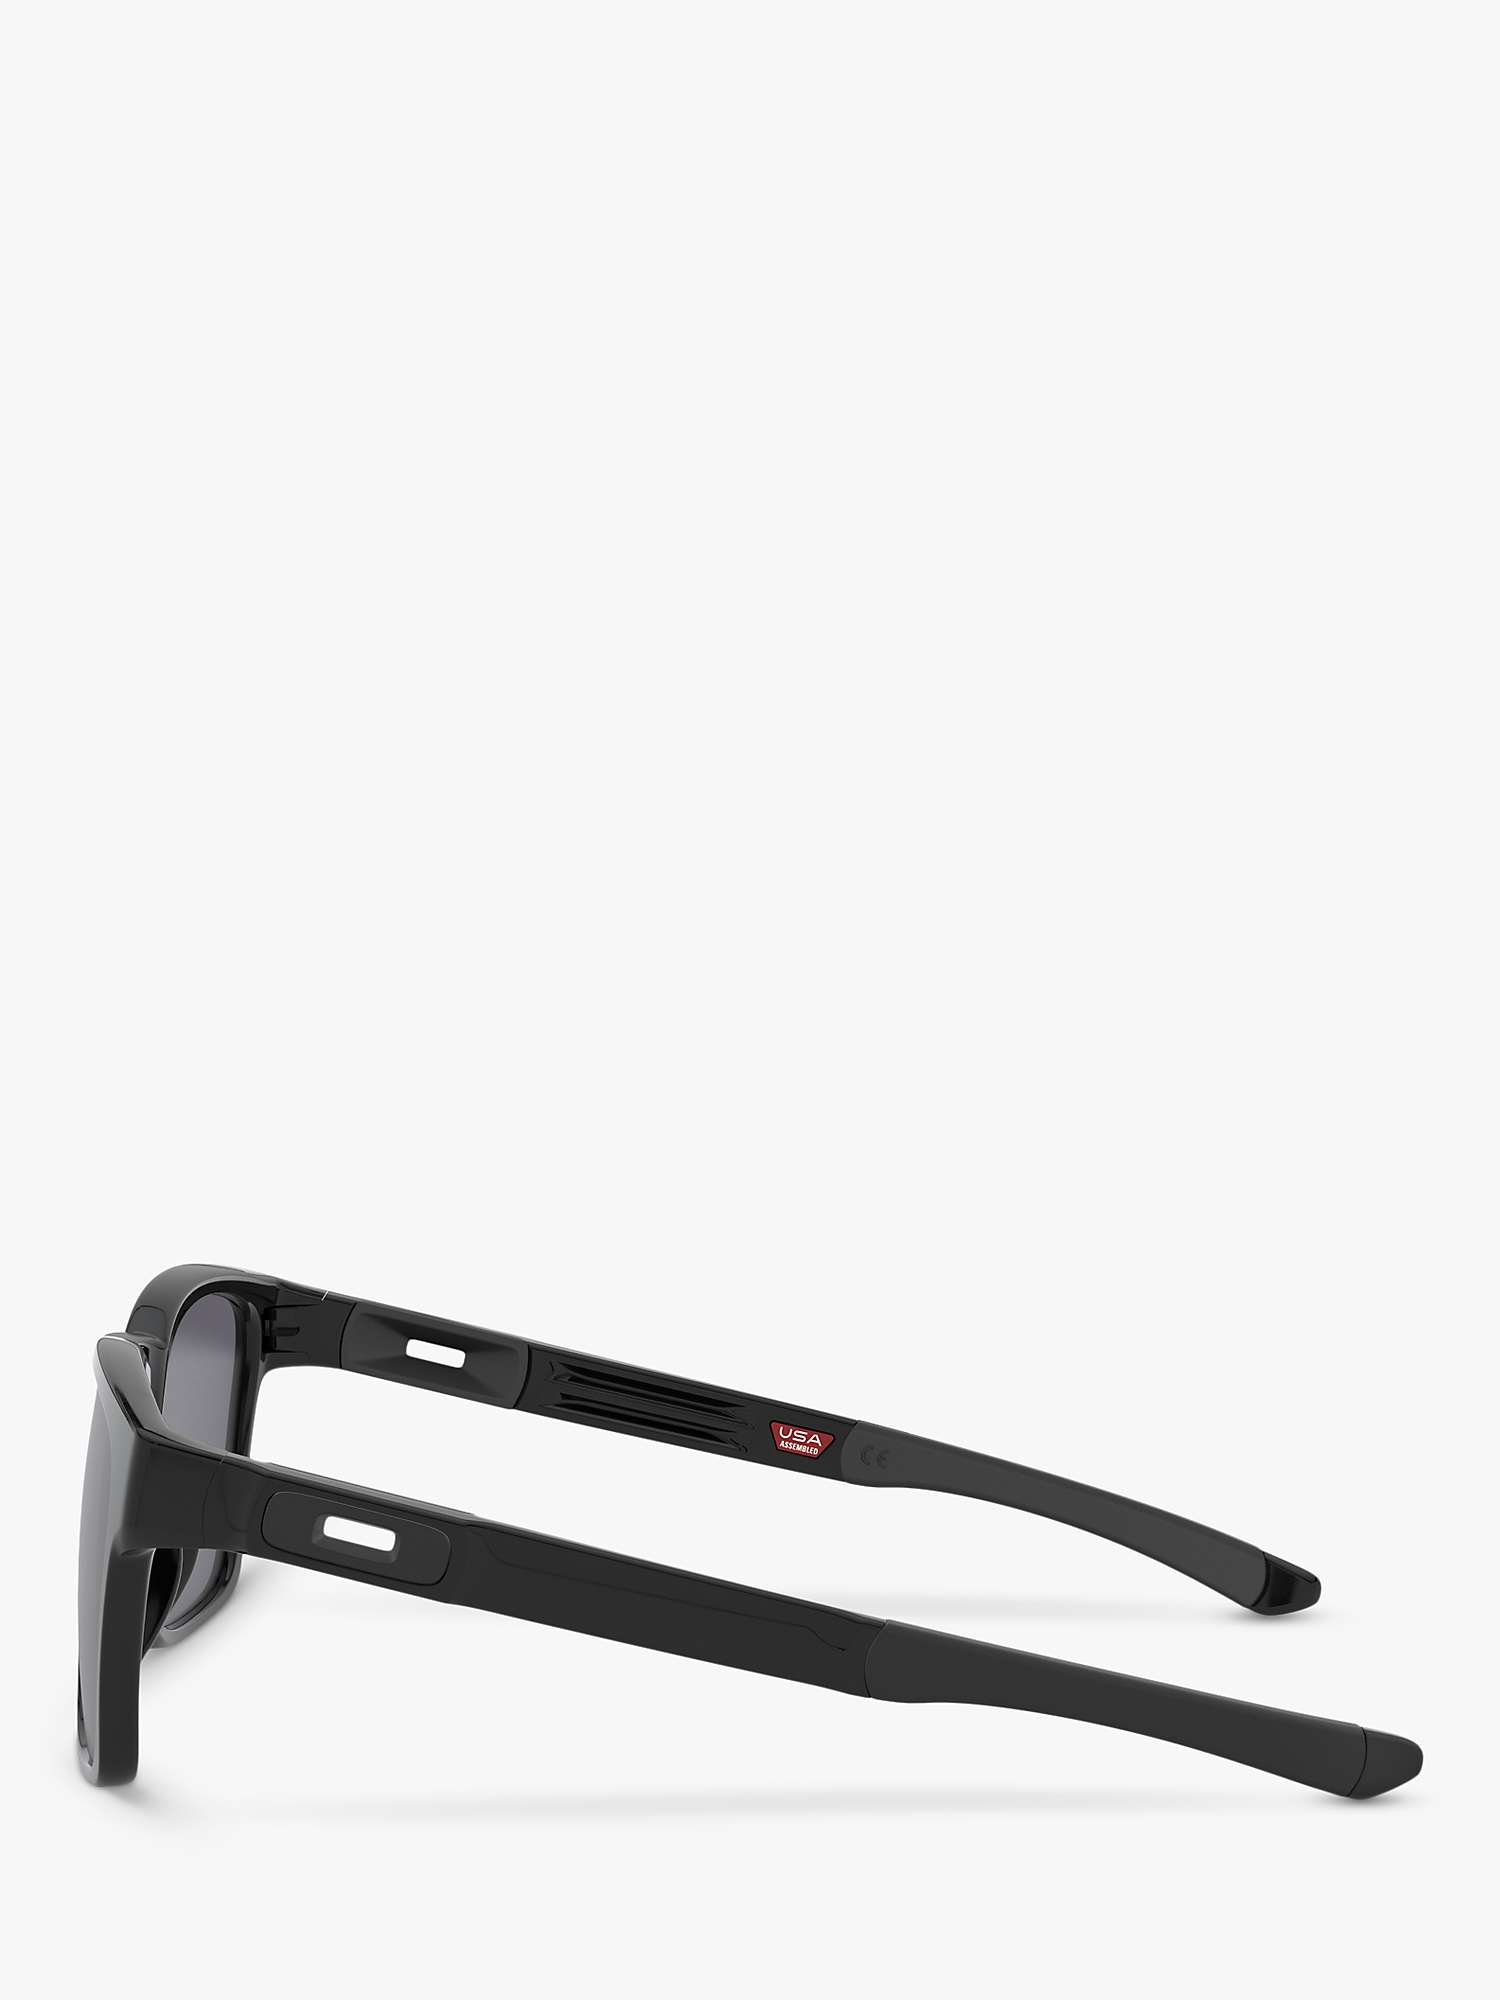 Buy Oakley OO9272 Men's Catalyst Rectangular Sunglasses, Polished Black/Grey Online at johnlewis.com